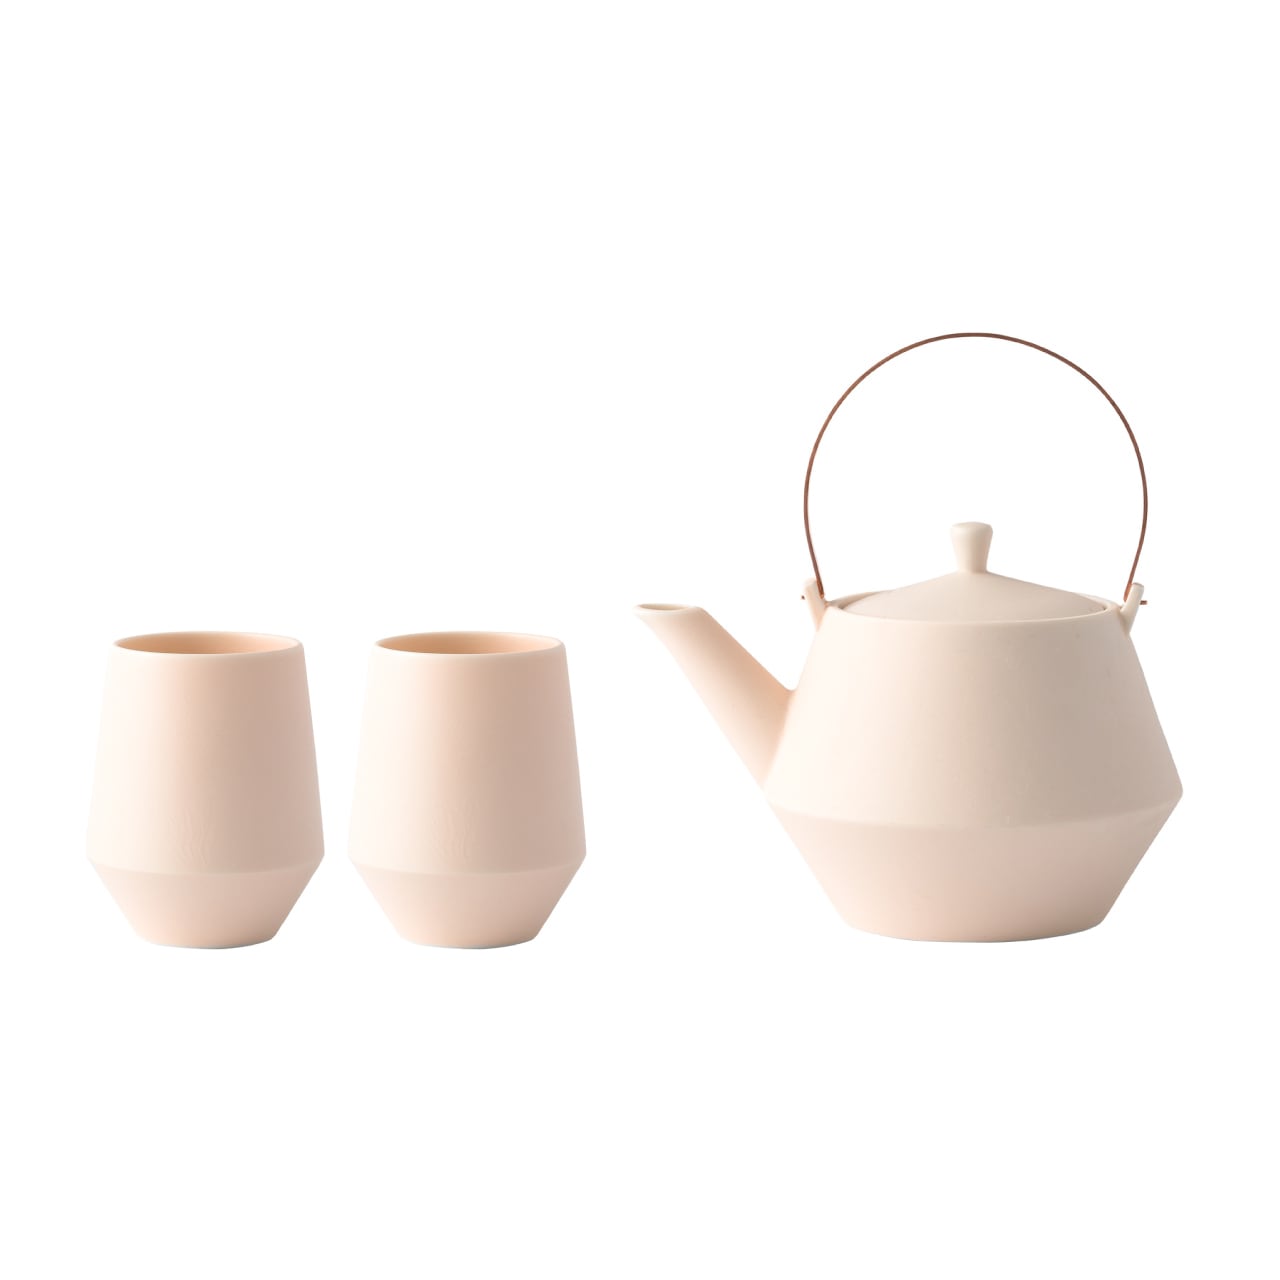 [GIFT SET] Frustum clay pot & teacup